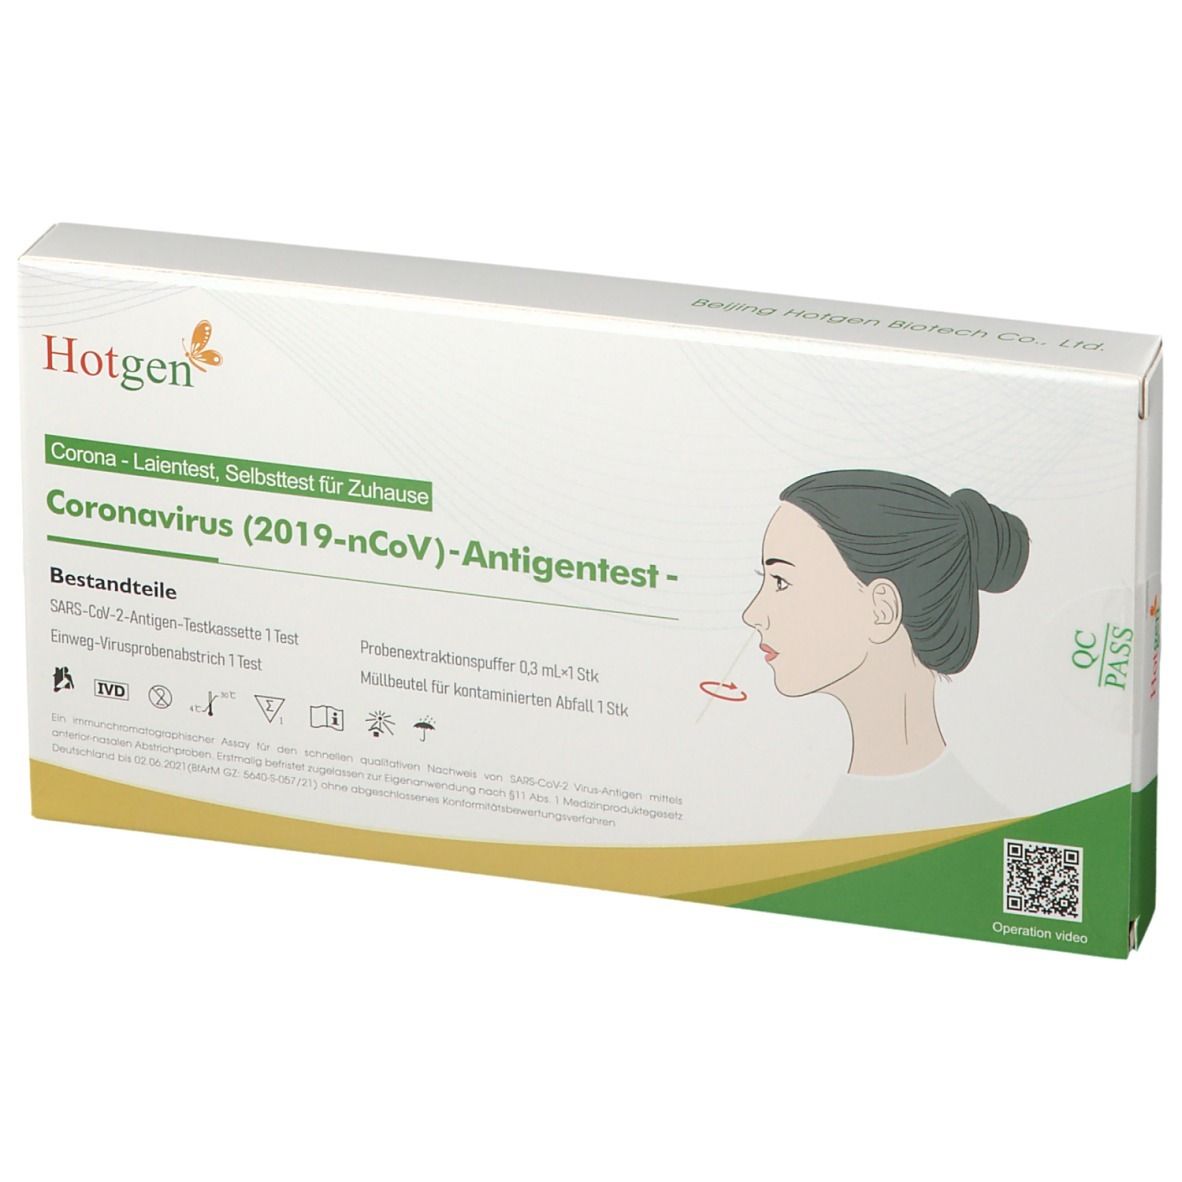 Hotgen Covid-19-Antigen-Selbsttest 10 Stück